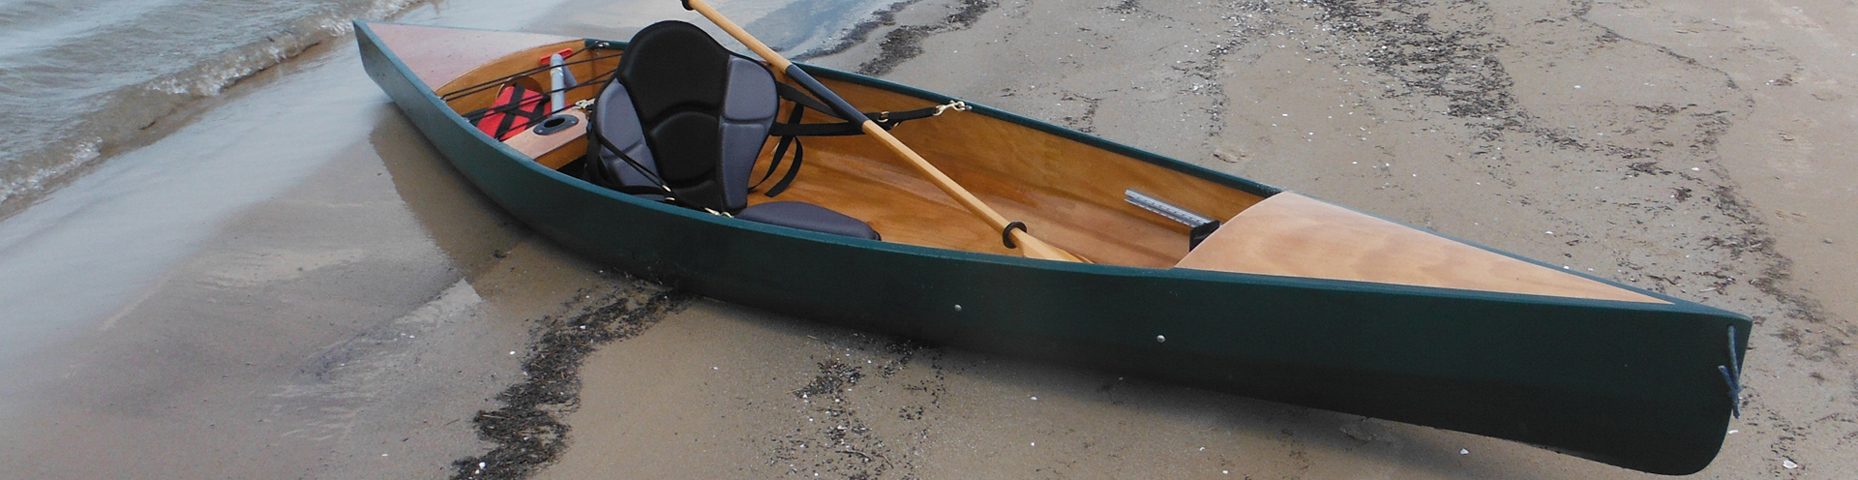 Kayaks: Steel River by Otto Vallinga Yacht Design - Image 4375